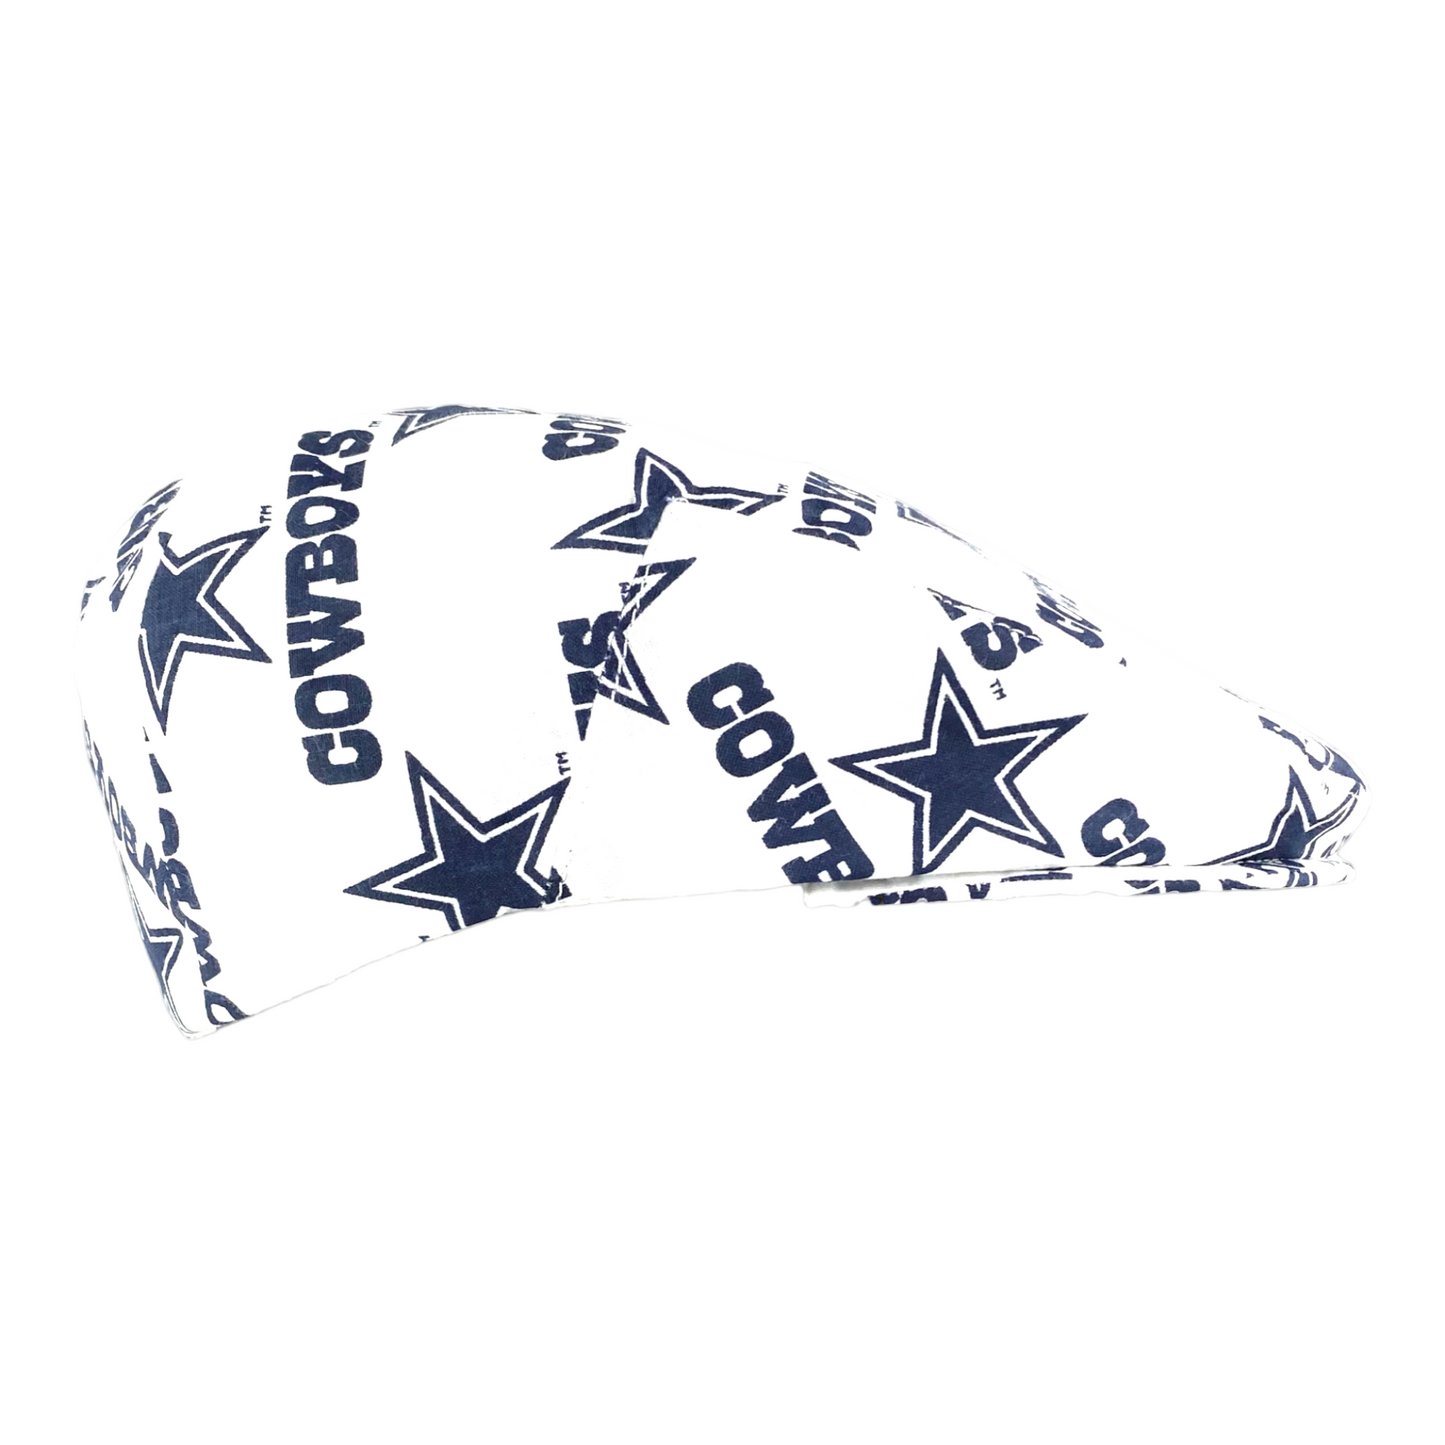 Custom Made Jeff Cap Handmade in Dallas Cowboys White Print Fabric